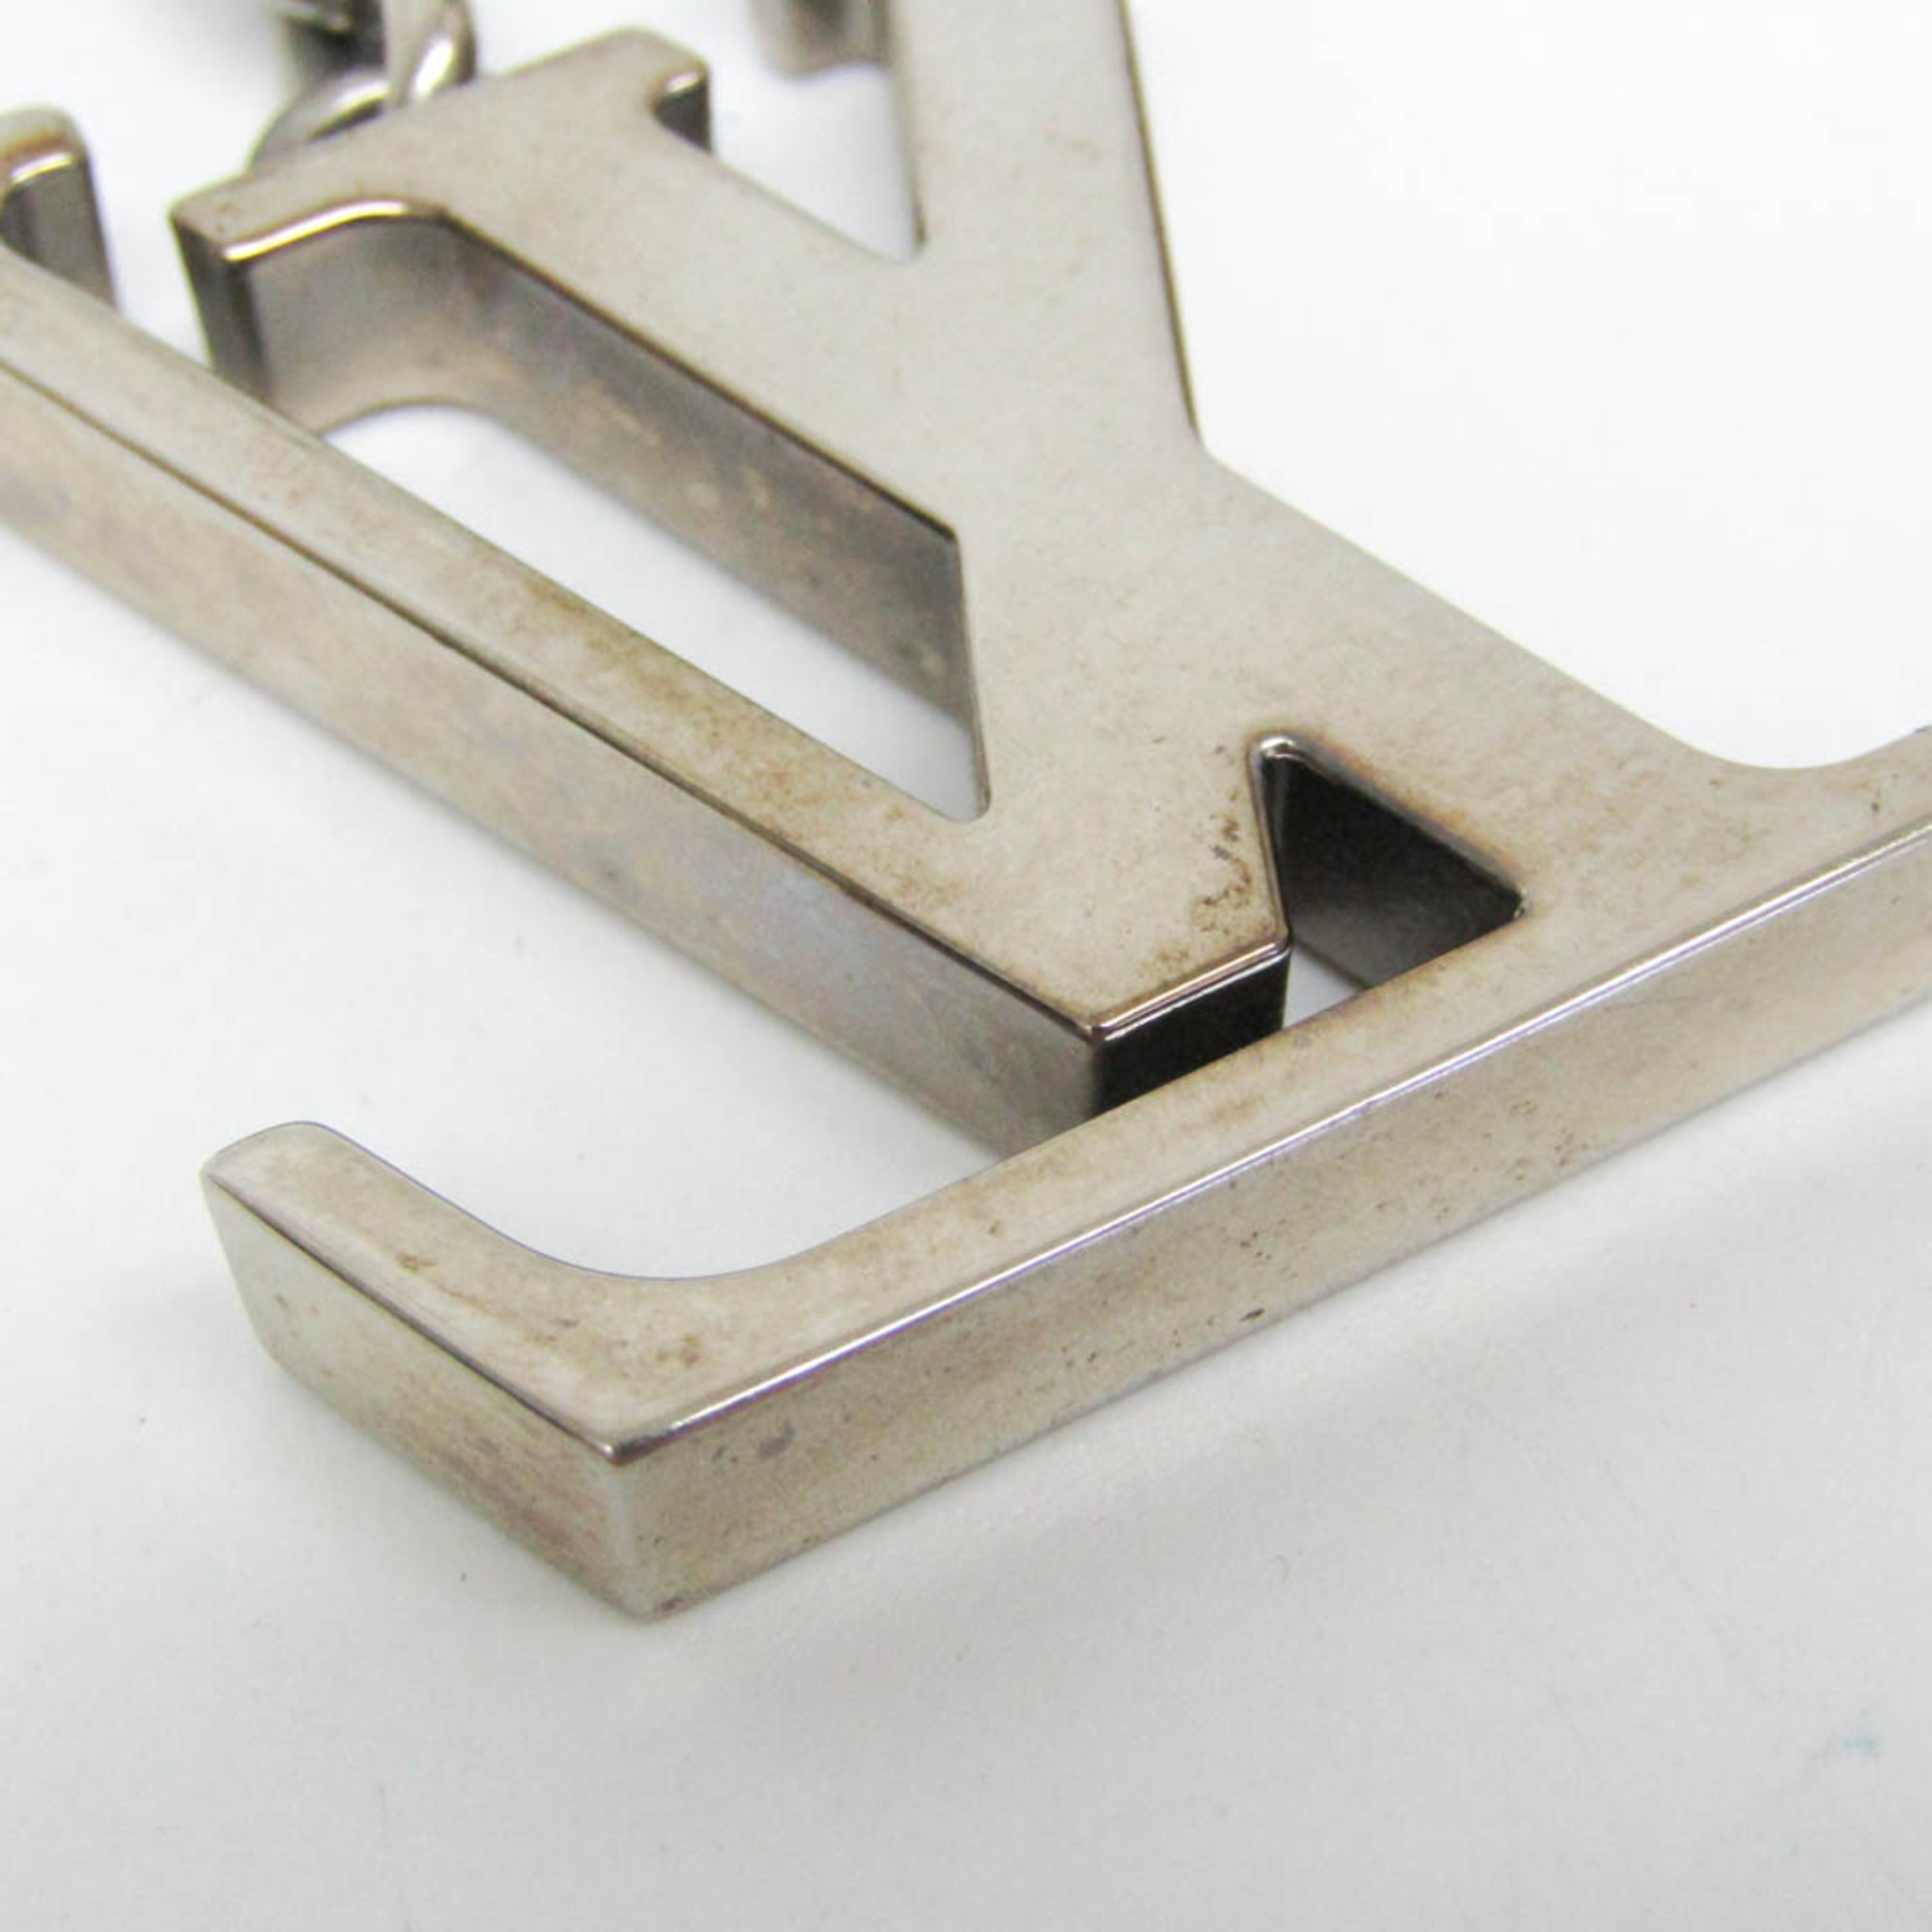 Louis Vuitton Initial Key Chain M65071 Keyring (Silver)